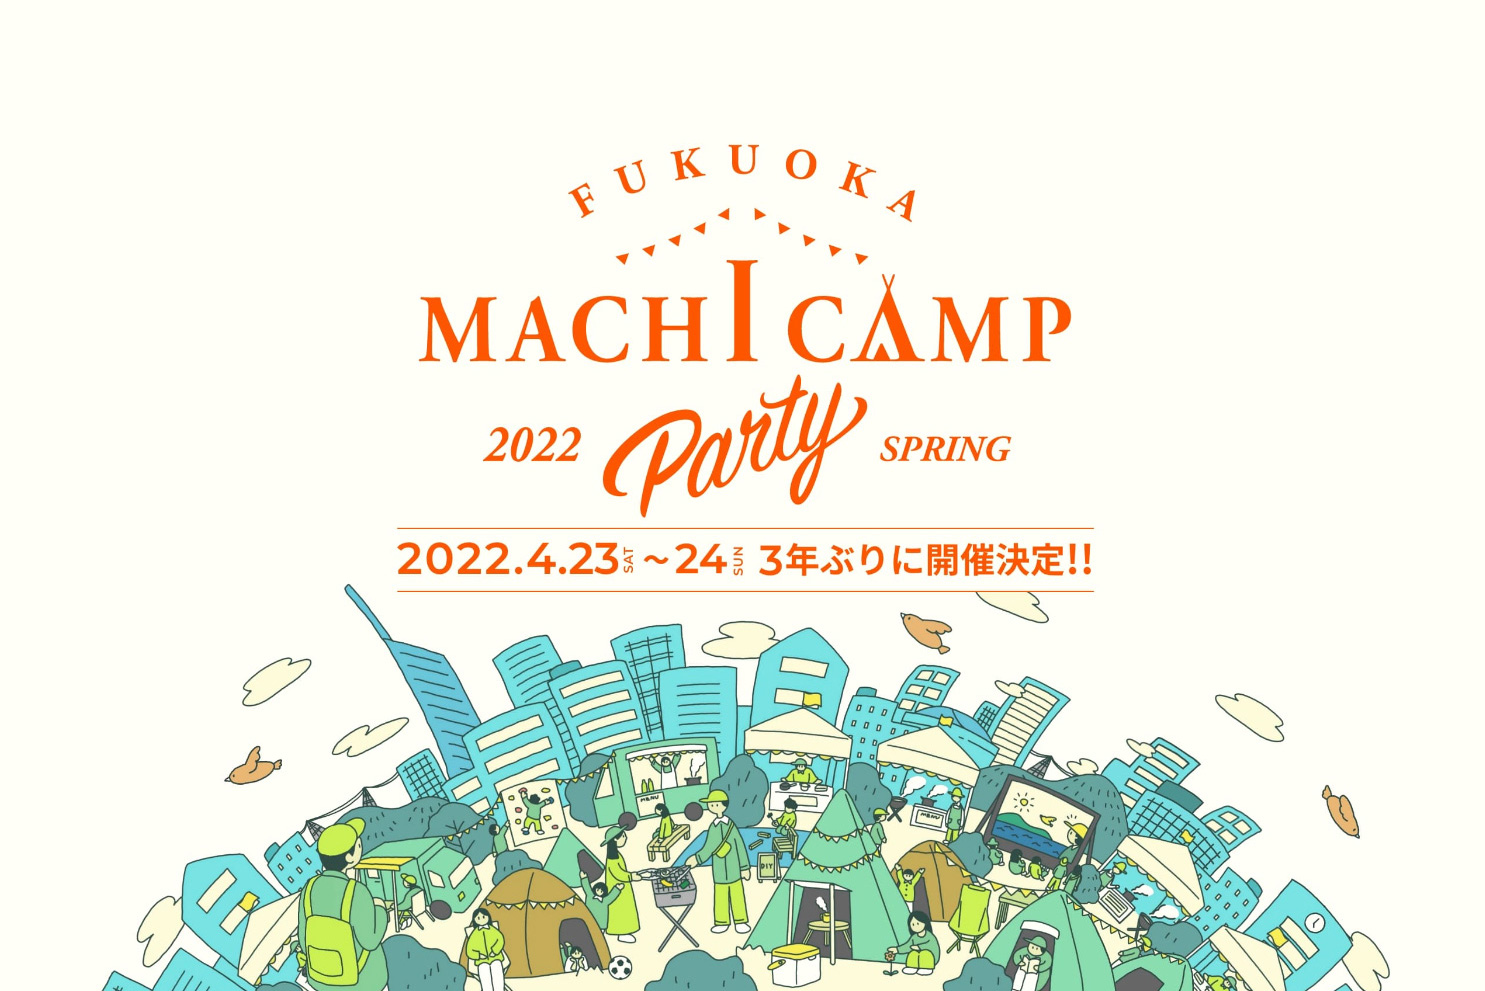 Fukuoka Machi Camp Party 2022